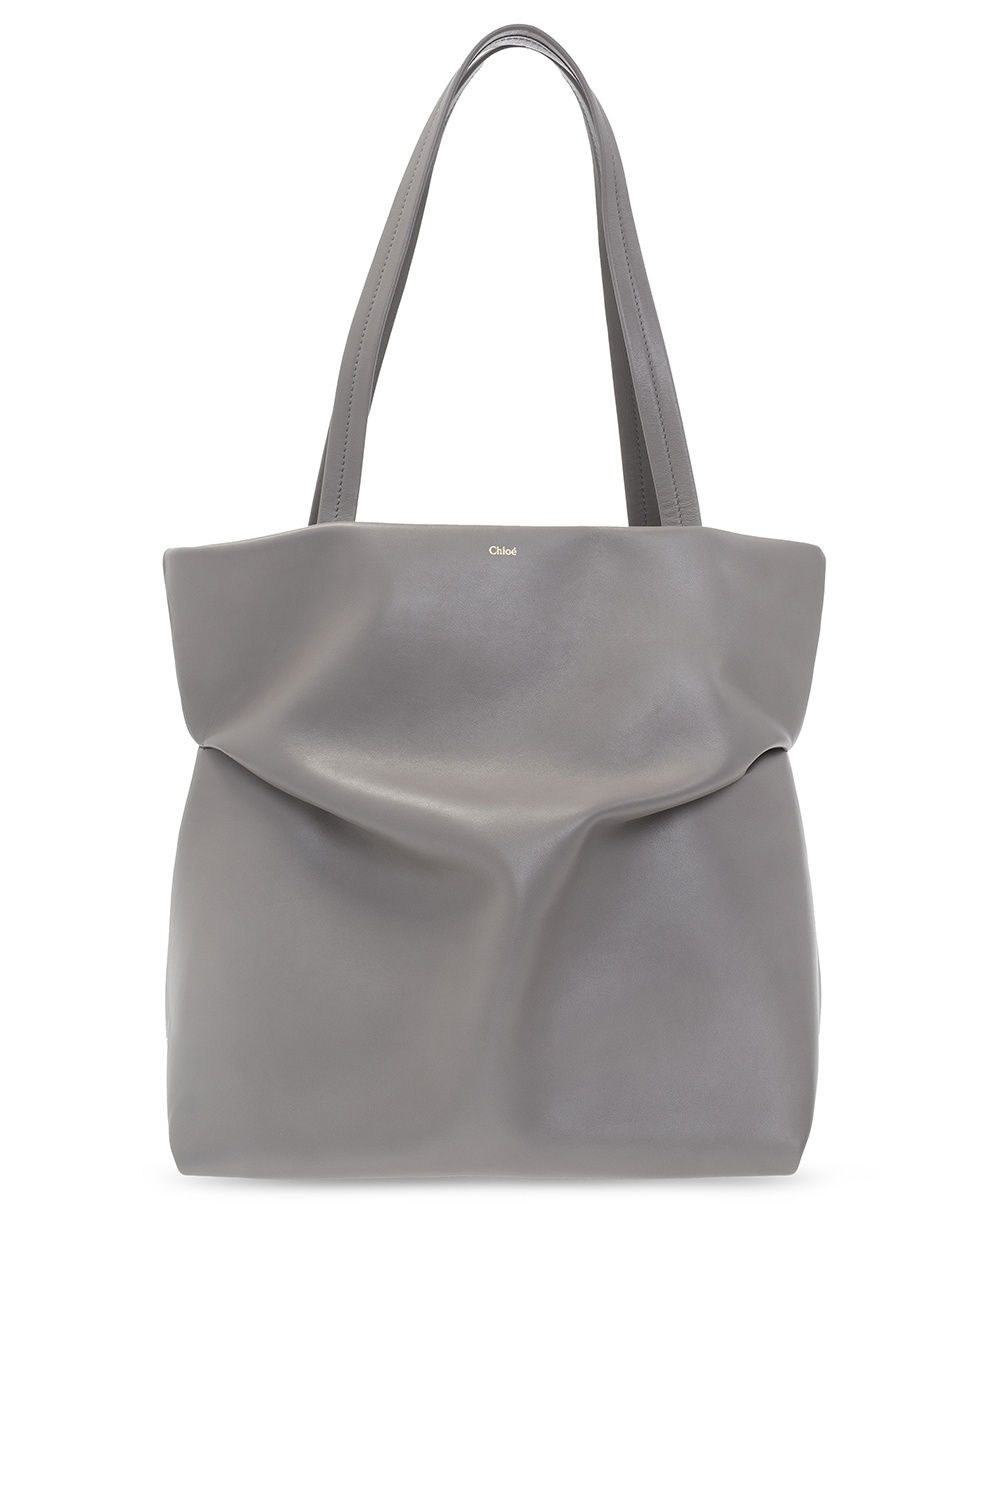 Chloé ‘Judy Tote’ shopper bag